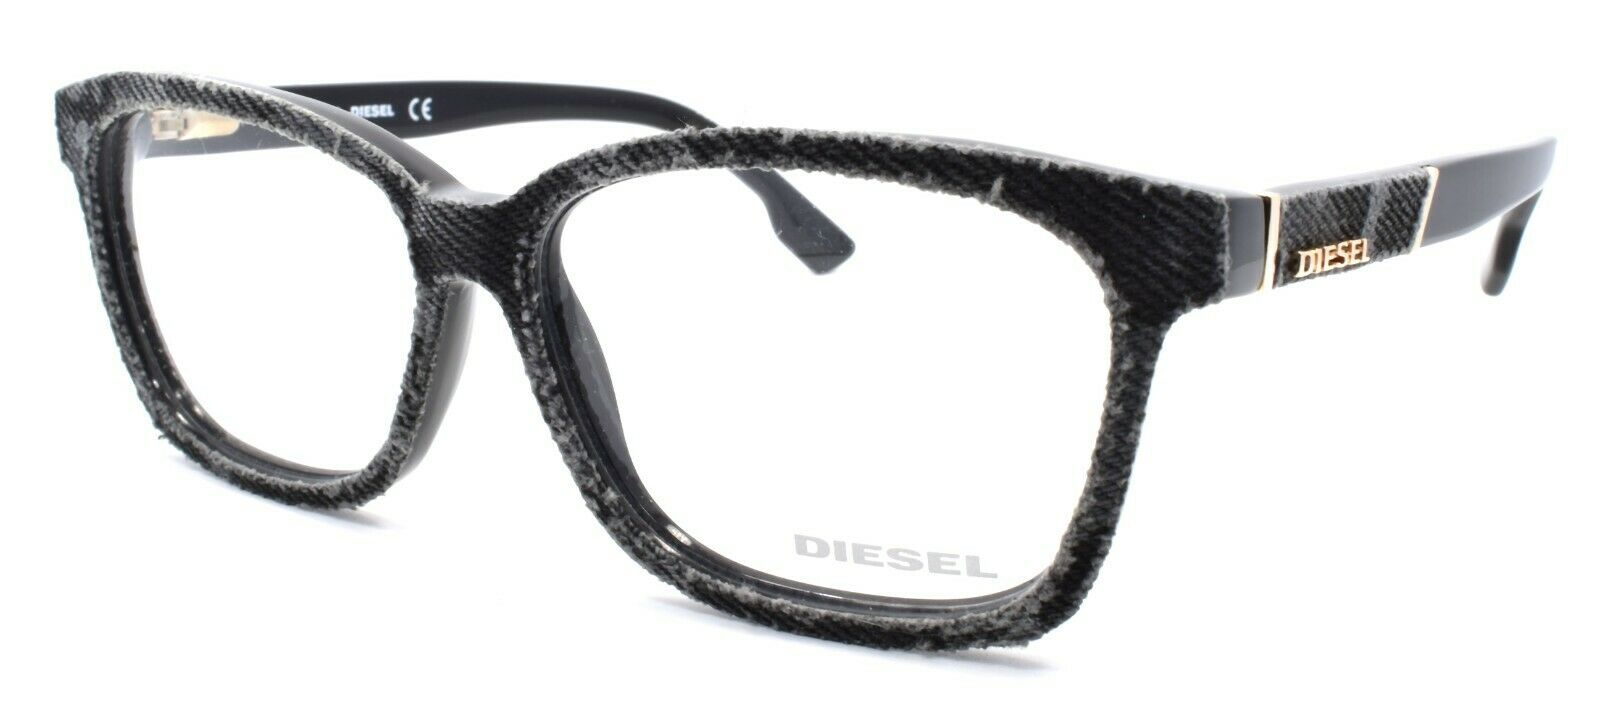 1-Diesel DL5137 020 Women's Eyeglasses Frames 55-14-140 Grey Denim / Black-664689668724-IKSpecs